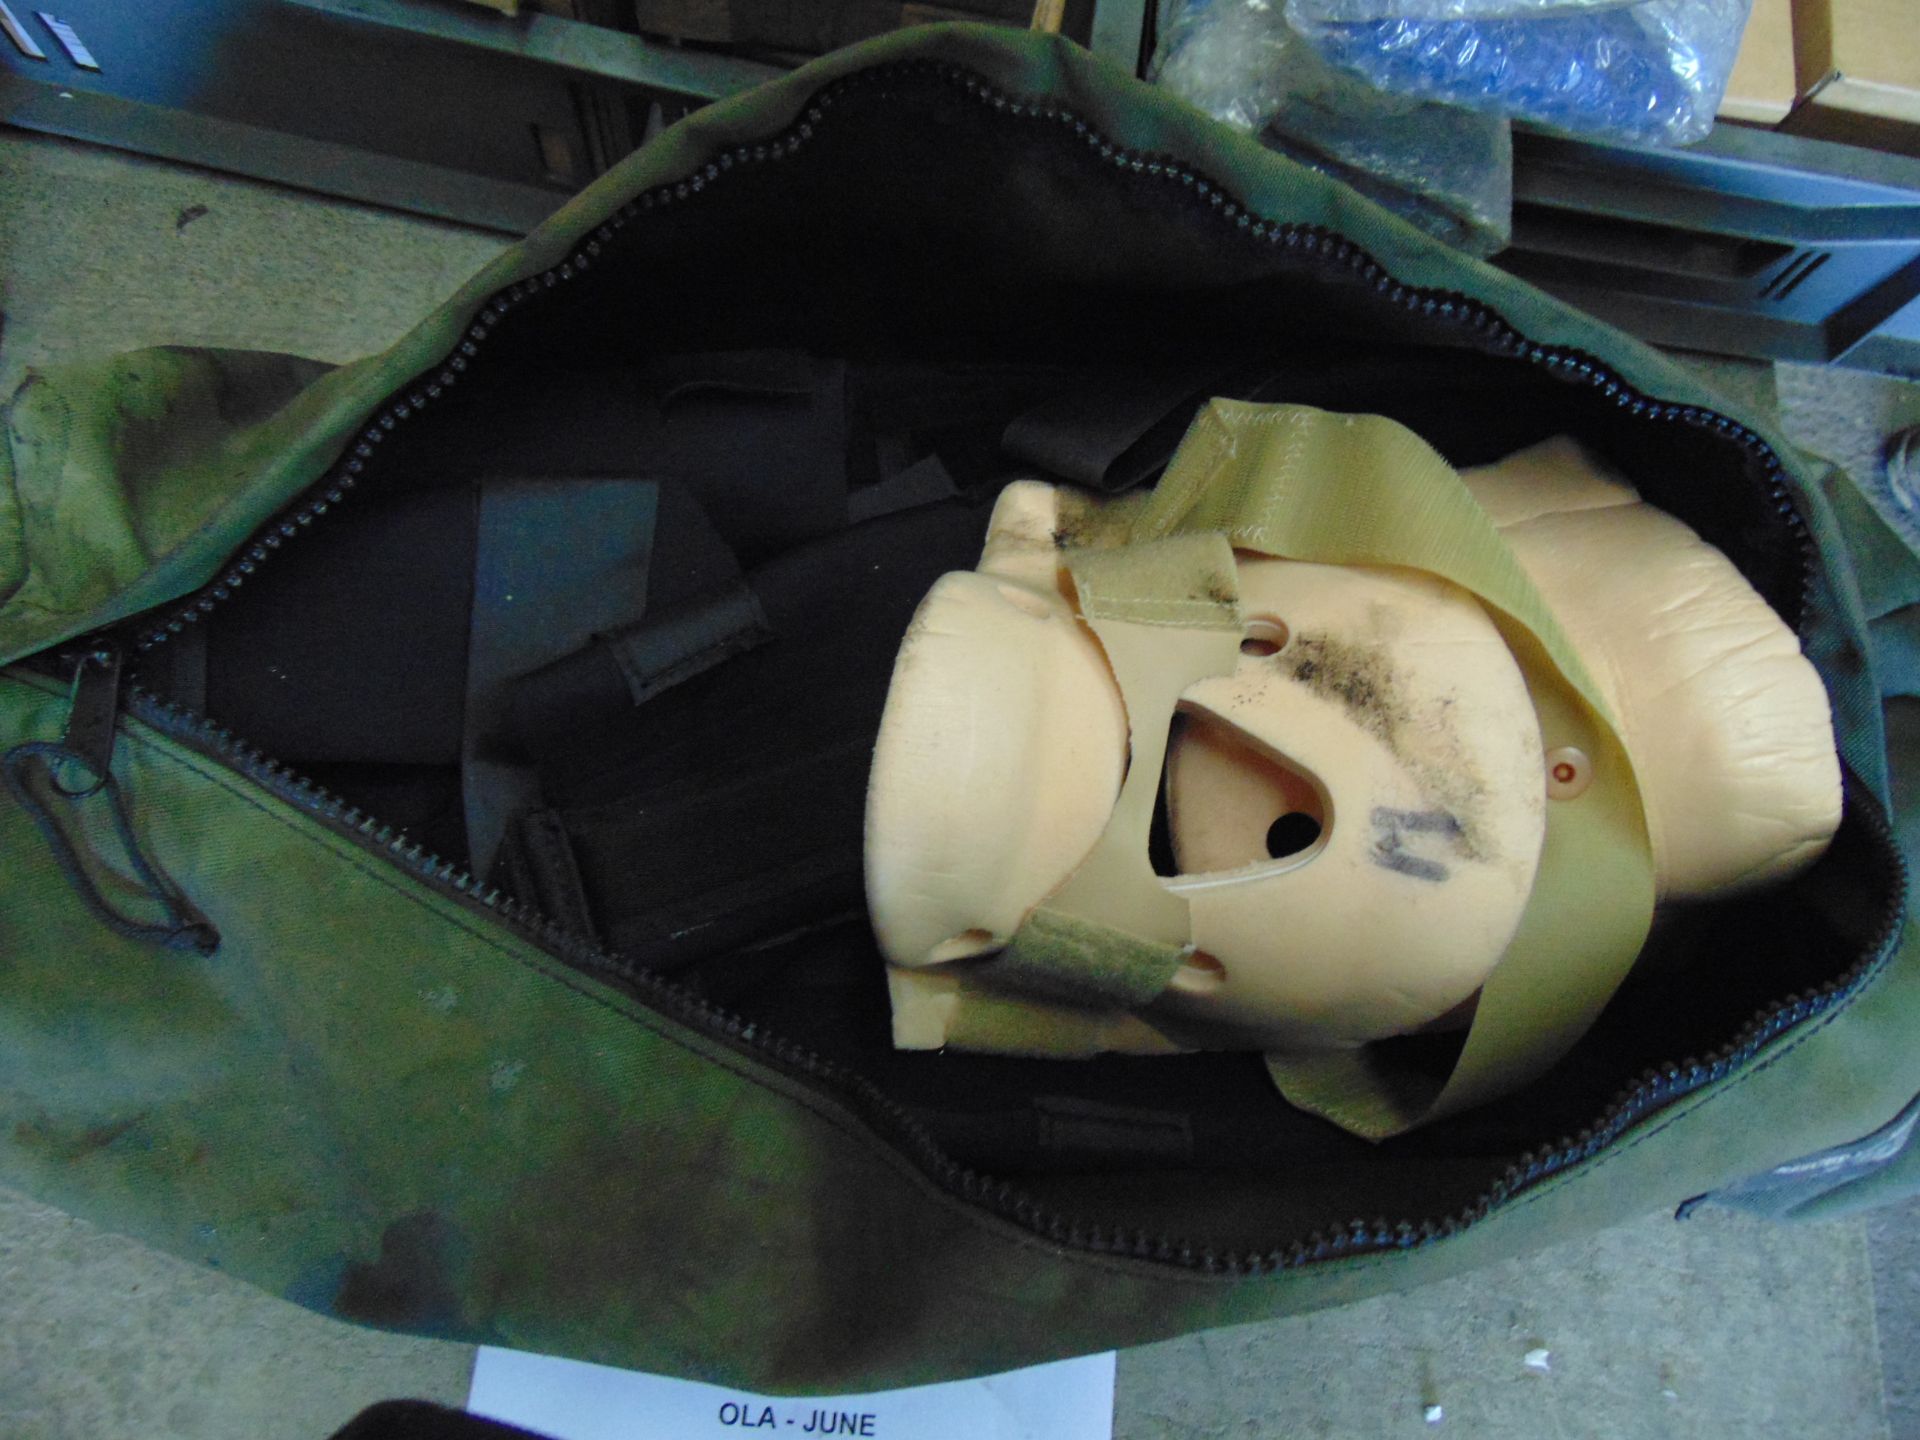 Emergancy Medical Rescue Kit c/w Splints Etc as Shown - Image 2 of 2